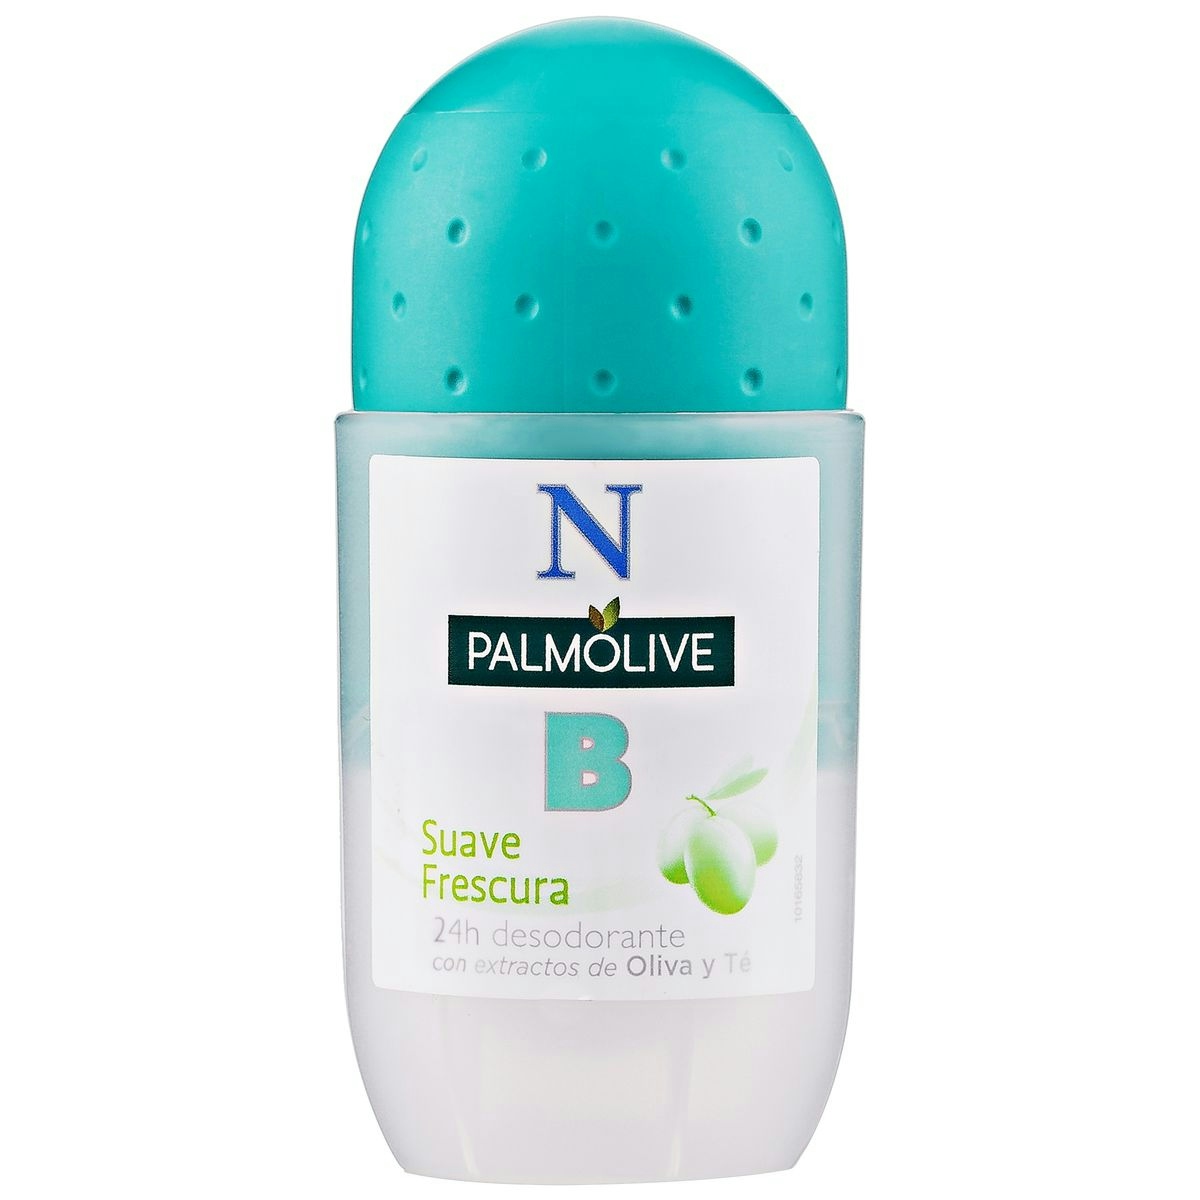 Desodorante suave frescura PALMOLIVE NB roll on 50 ml